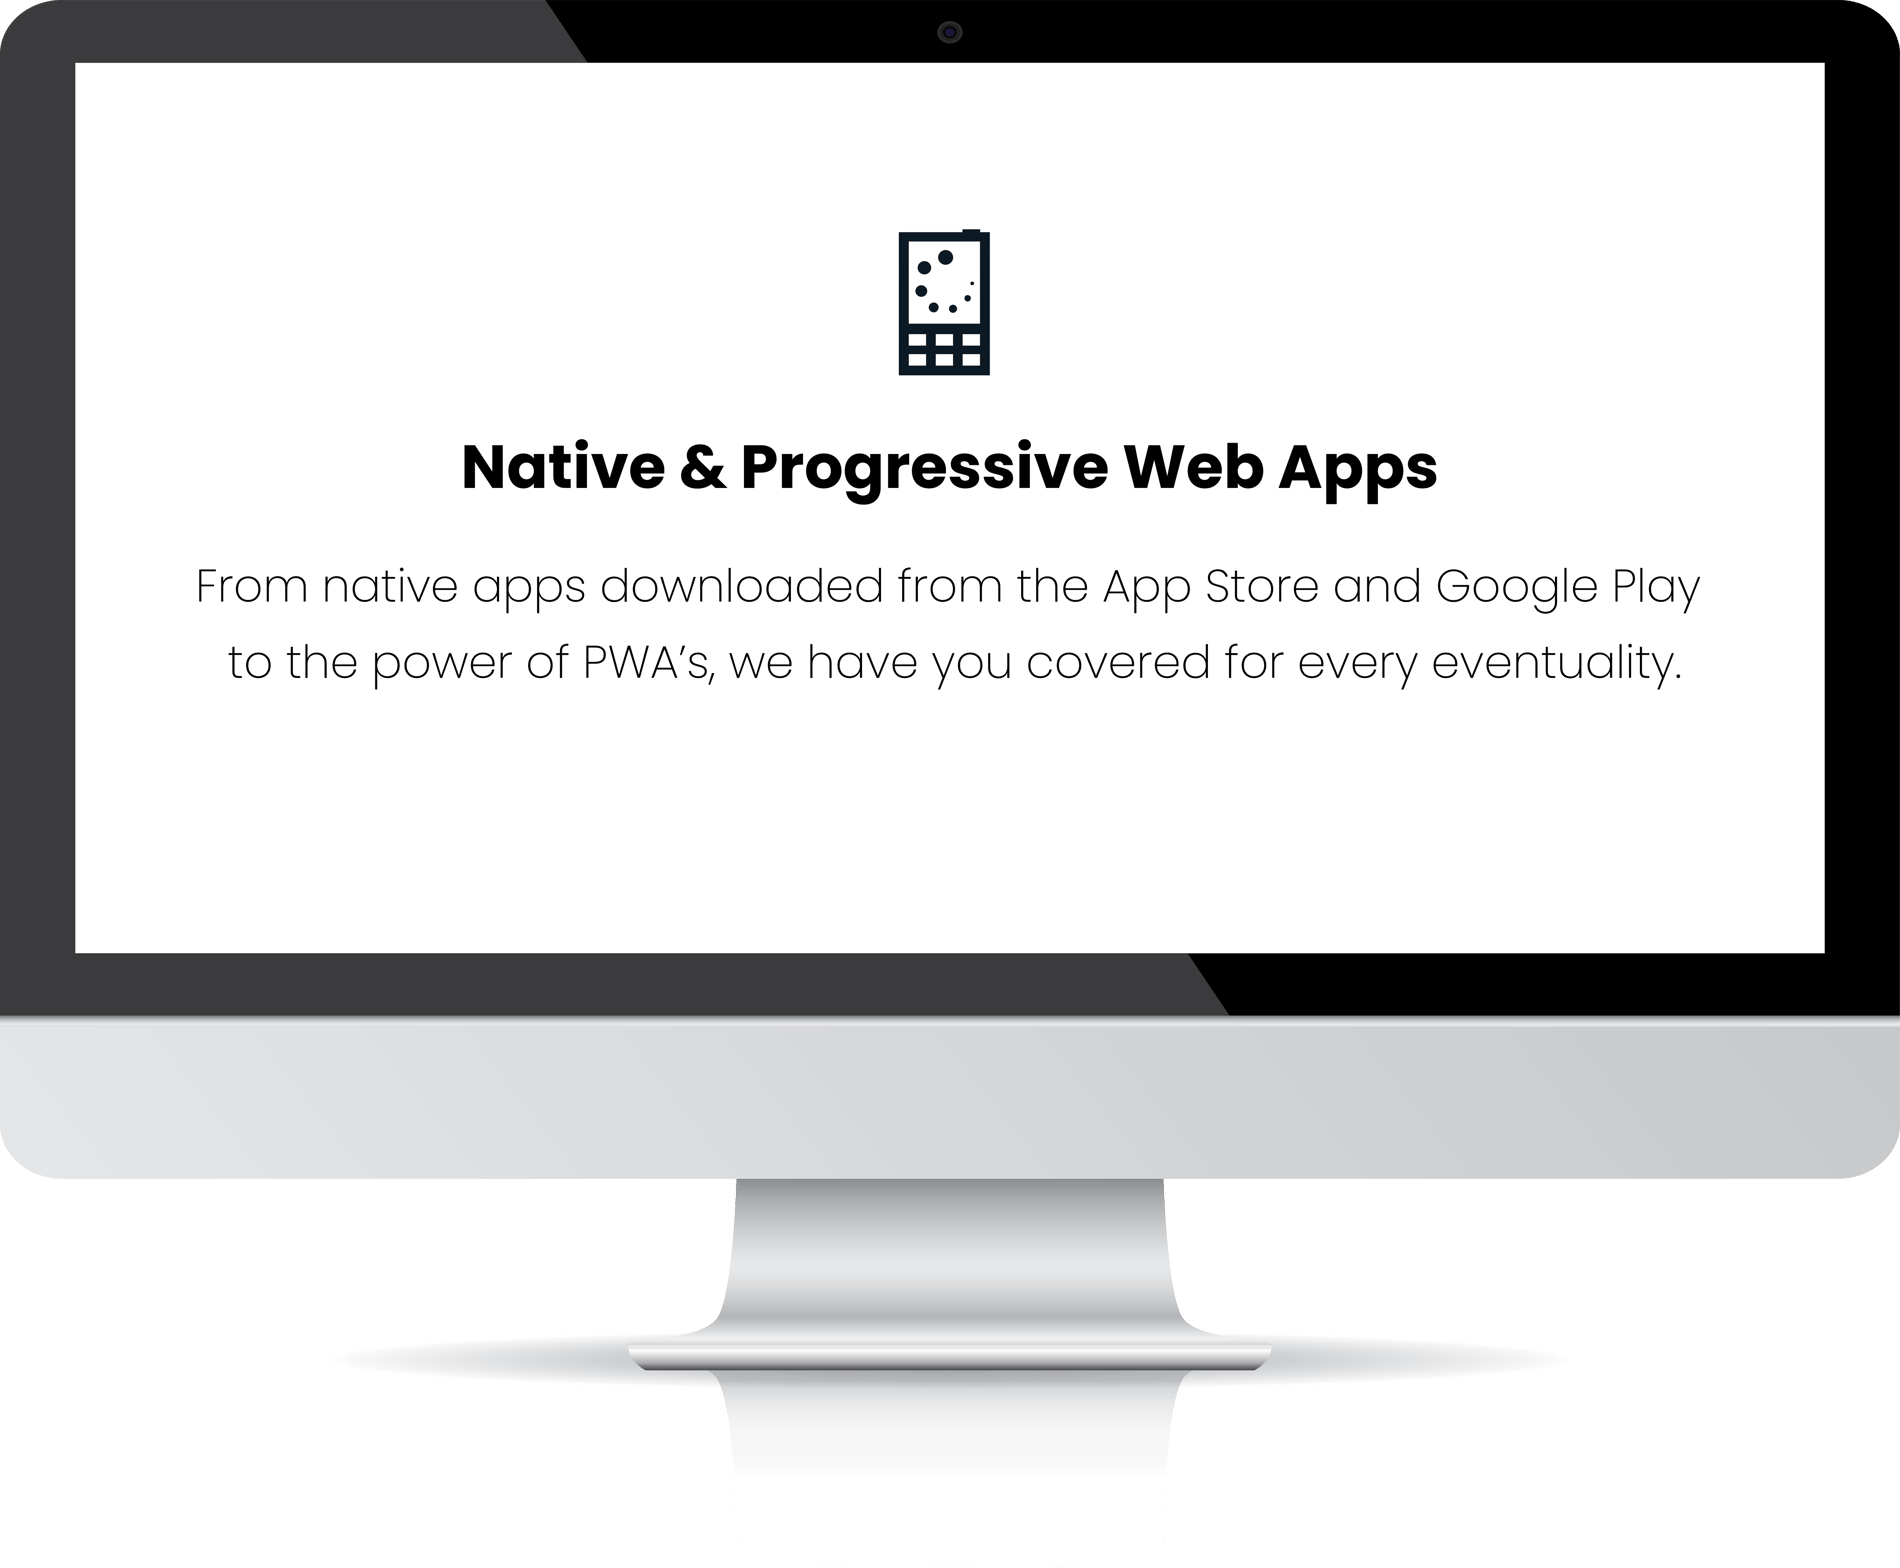 Native & Progressive Web Apps